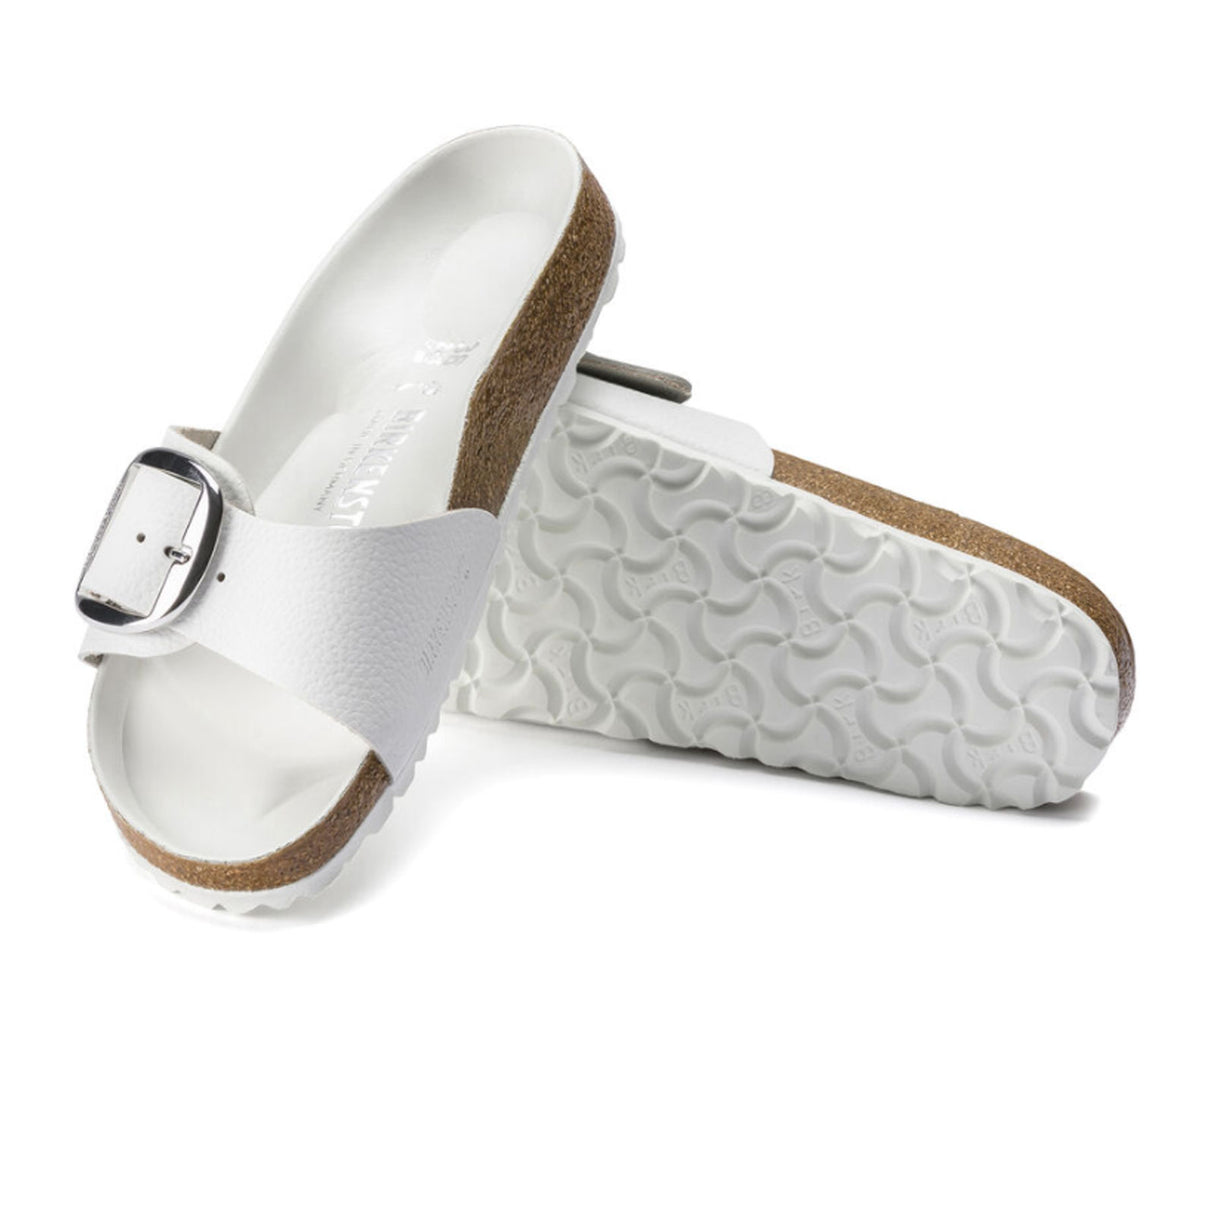 Birkenstock Madrid Big Buckle Narrow Slide Sandal (Women) - White Sandals - Slide - The Heel Shoe Fitters